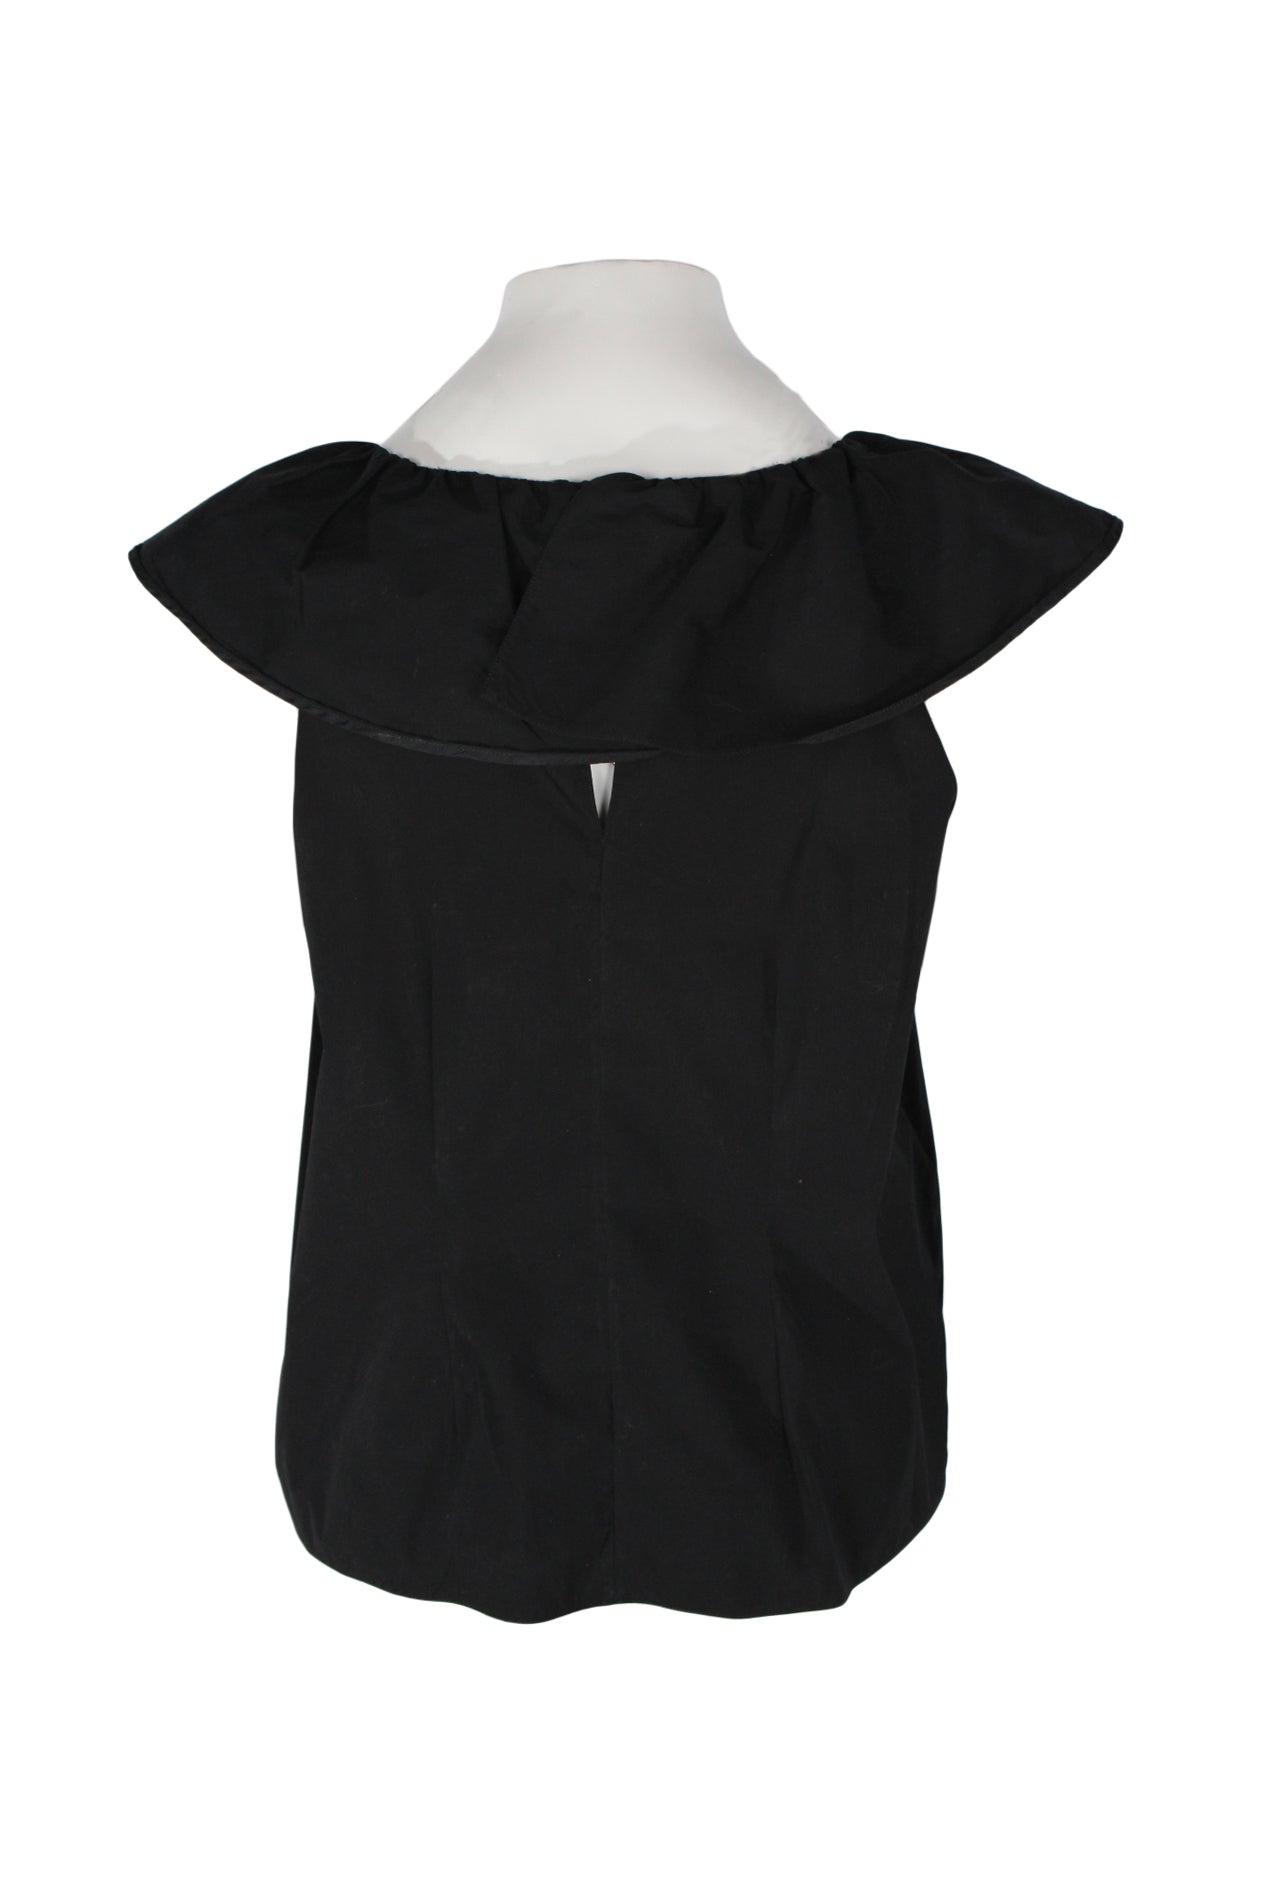 back angle prada black sleeveless top on feminine mannequin torso featuring keyhole upper back and ruffle neckline.